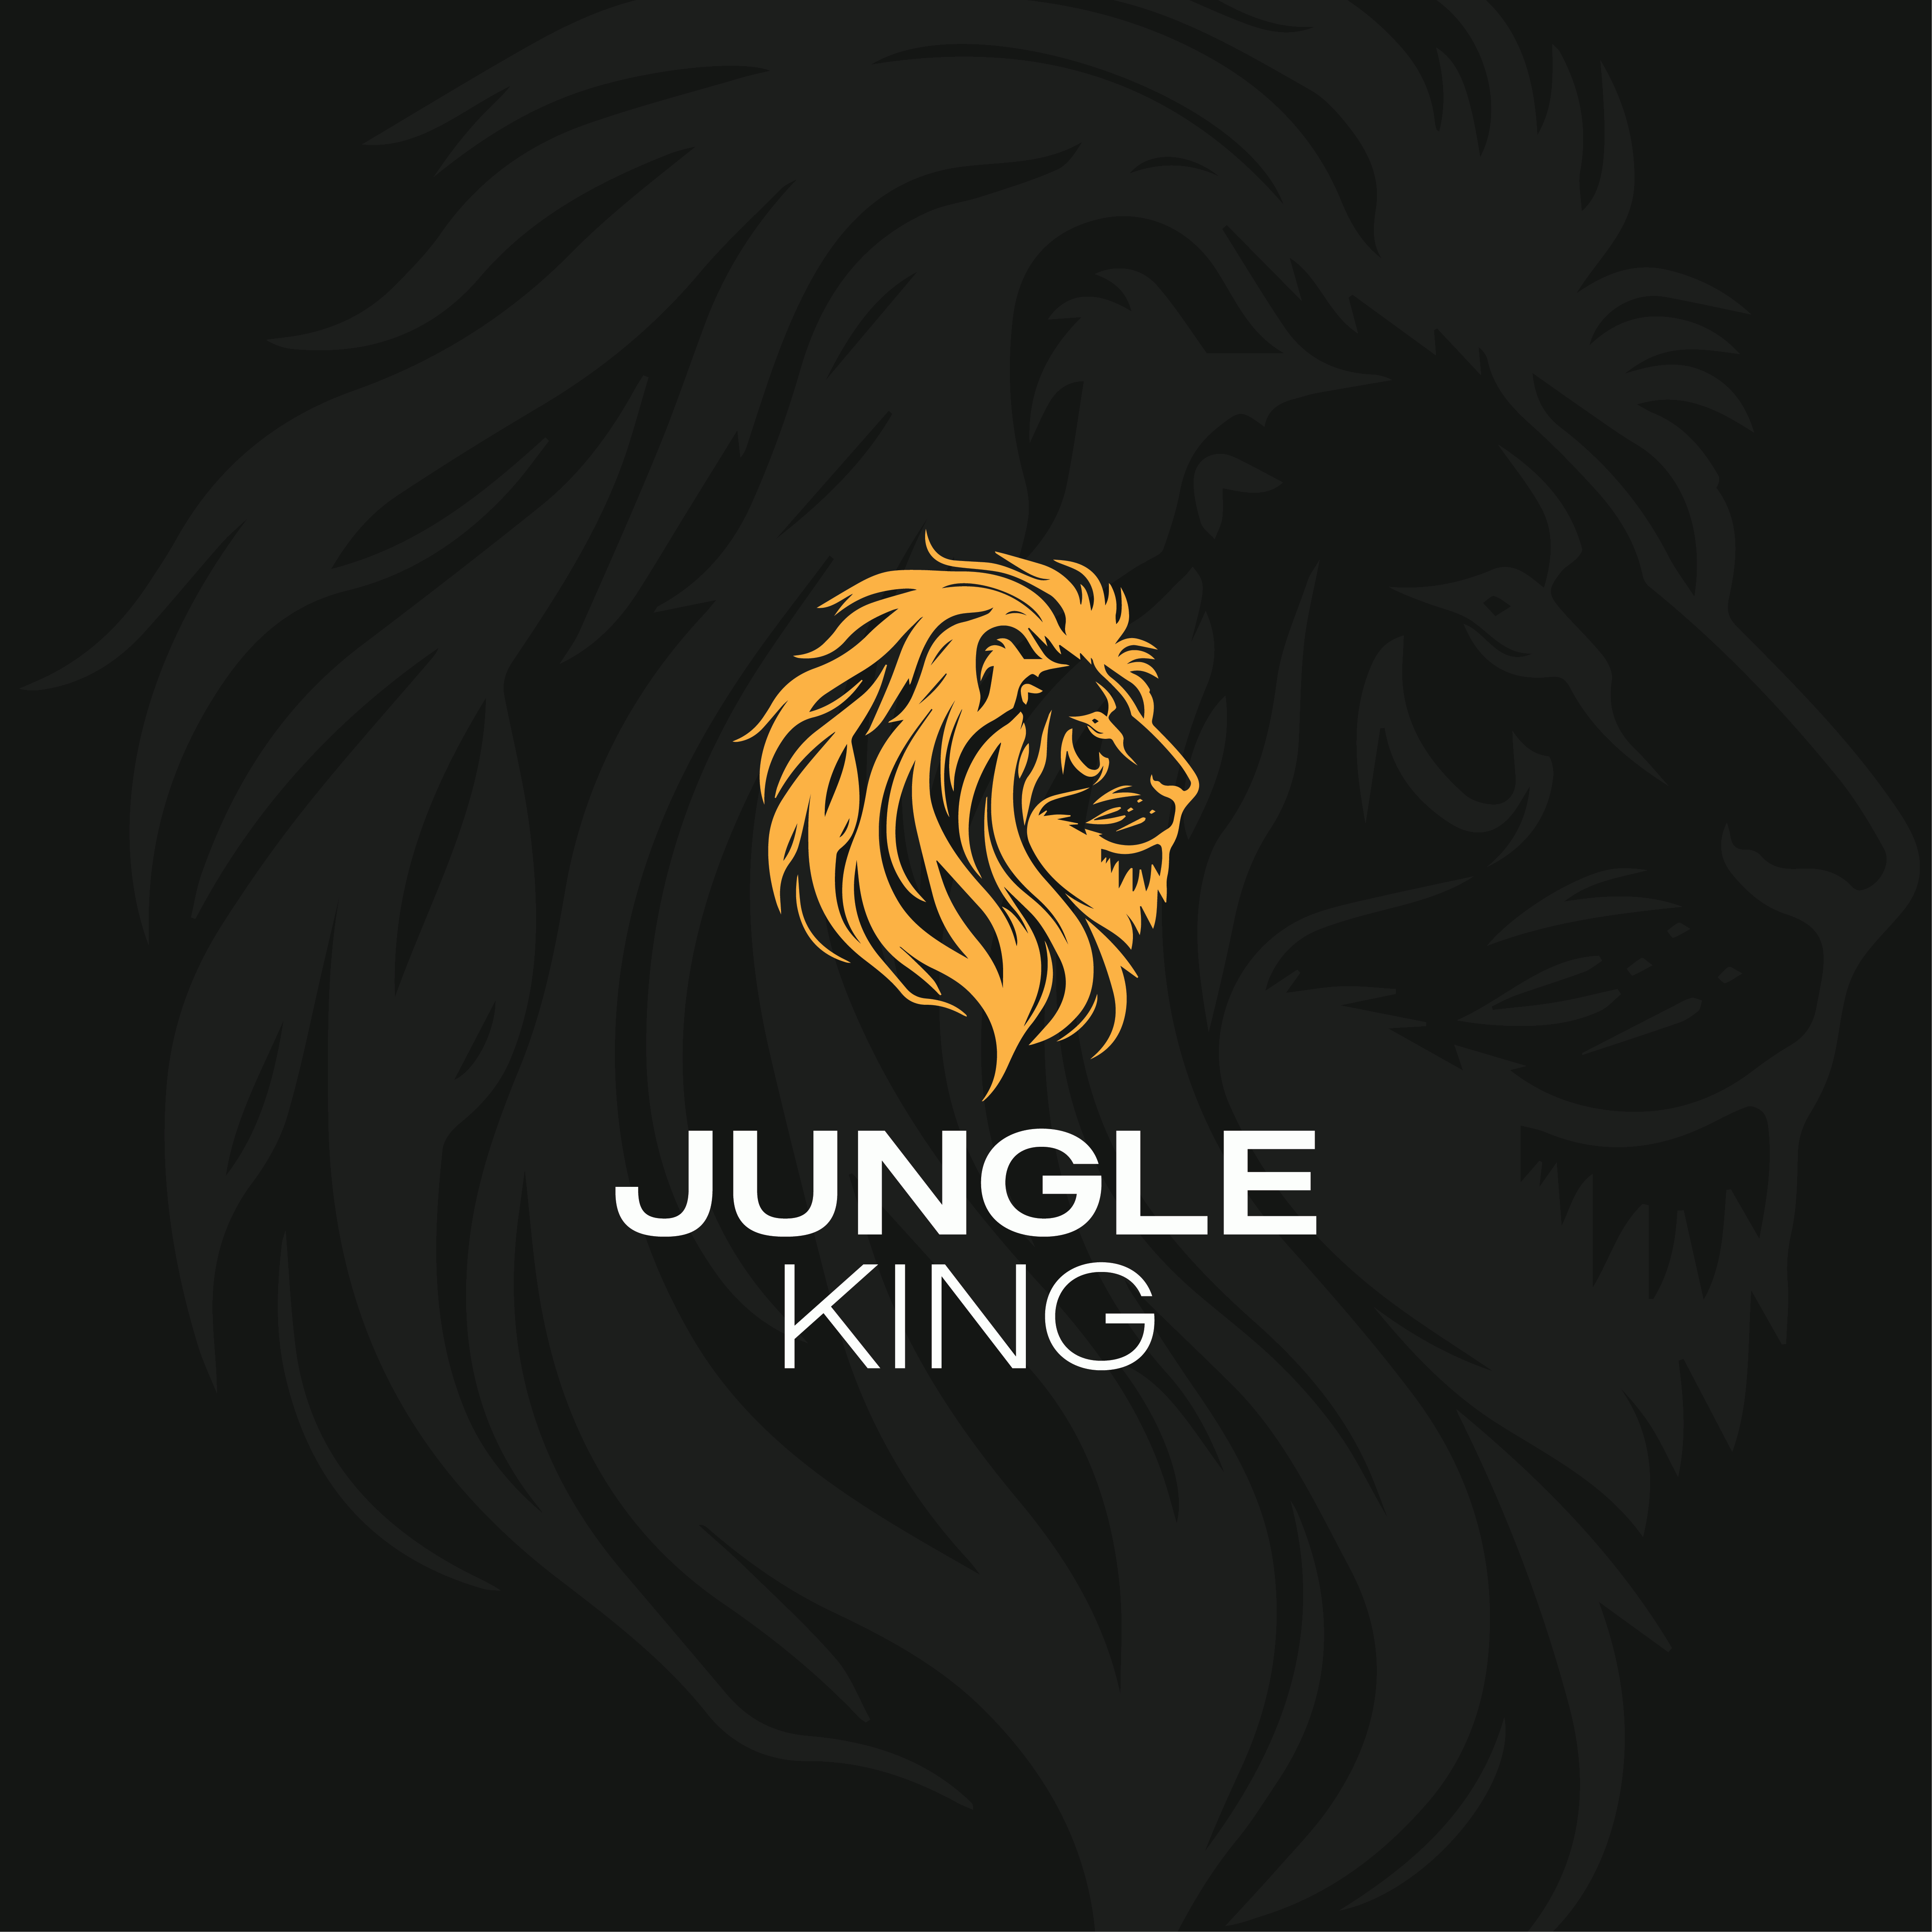 Pure Jungle